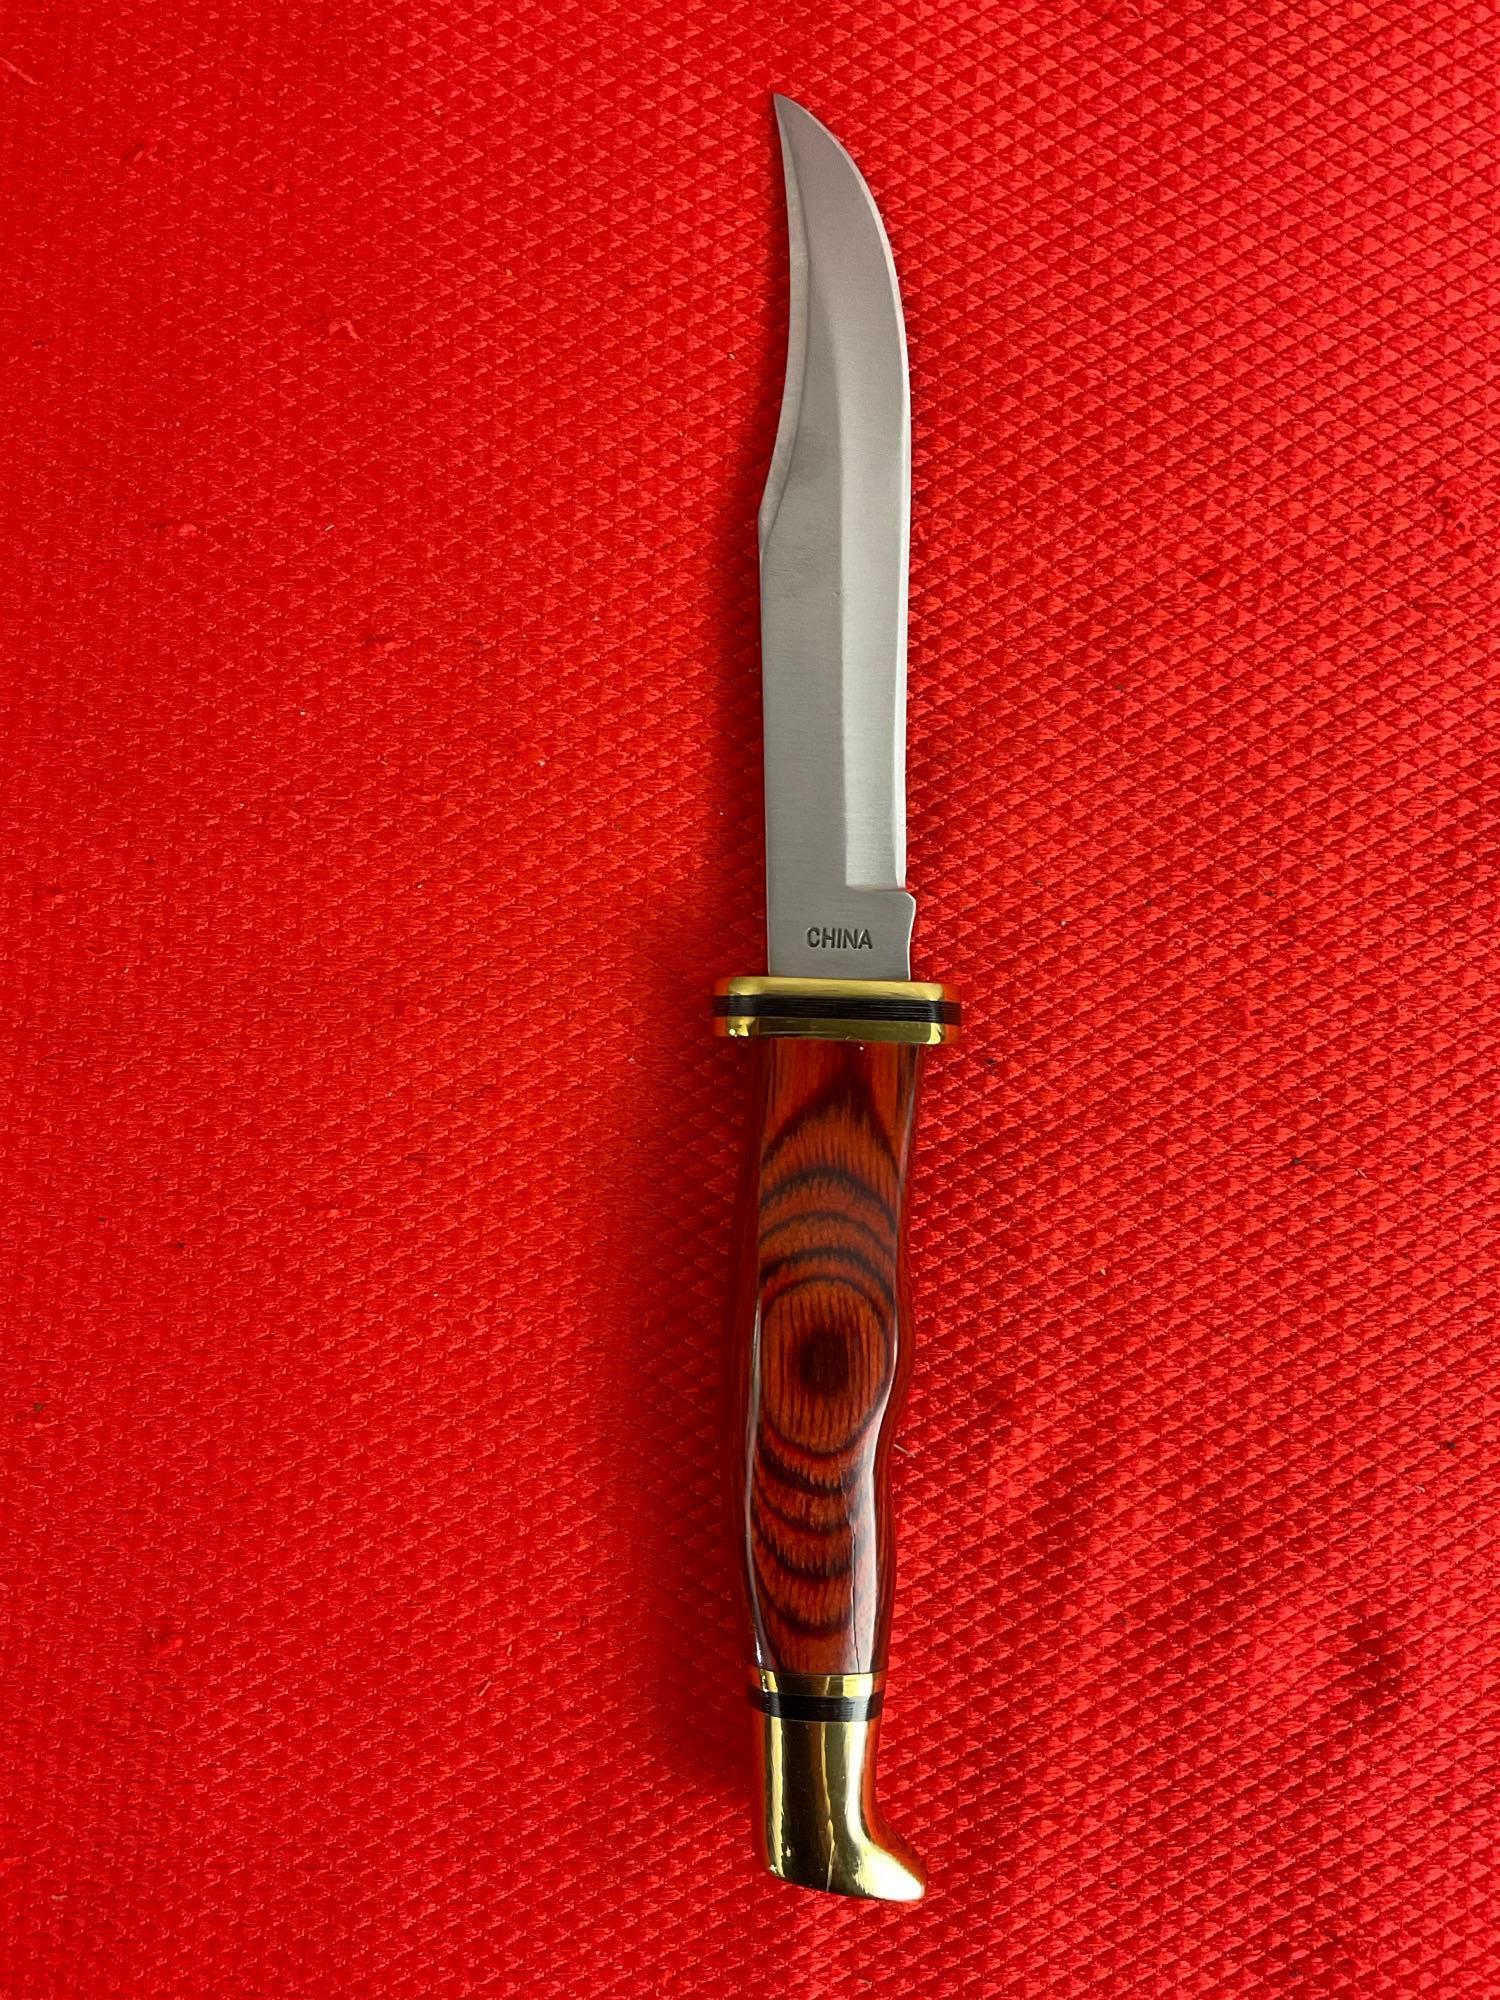 Catonsville Pocket & Pen Knife Company 5" Steel Fixed Blade Hunting Knife w/ Nylon Sheath. NIB. See